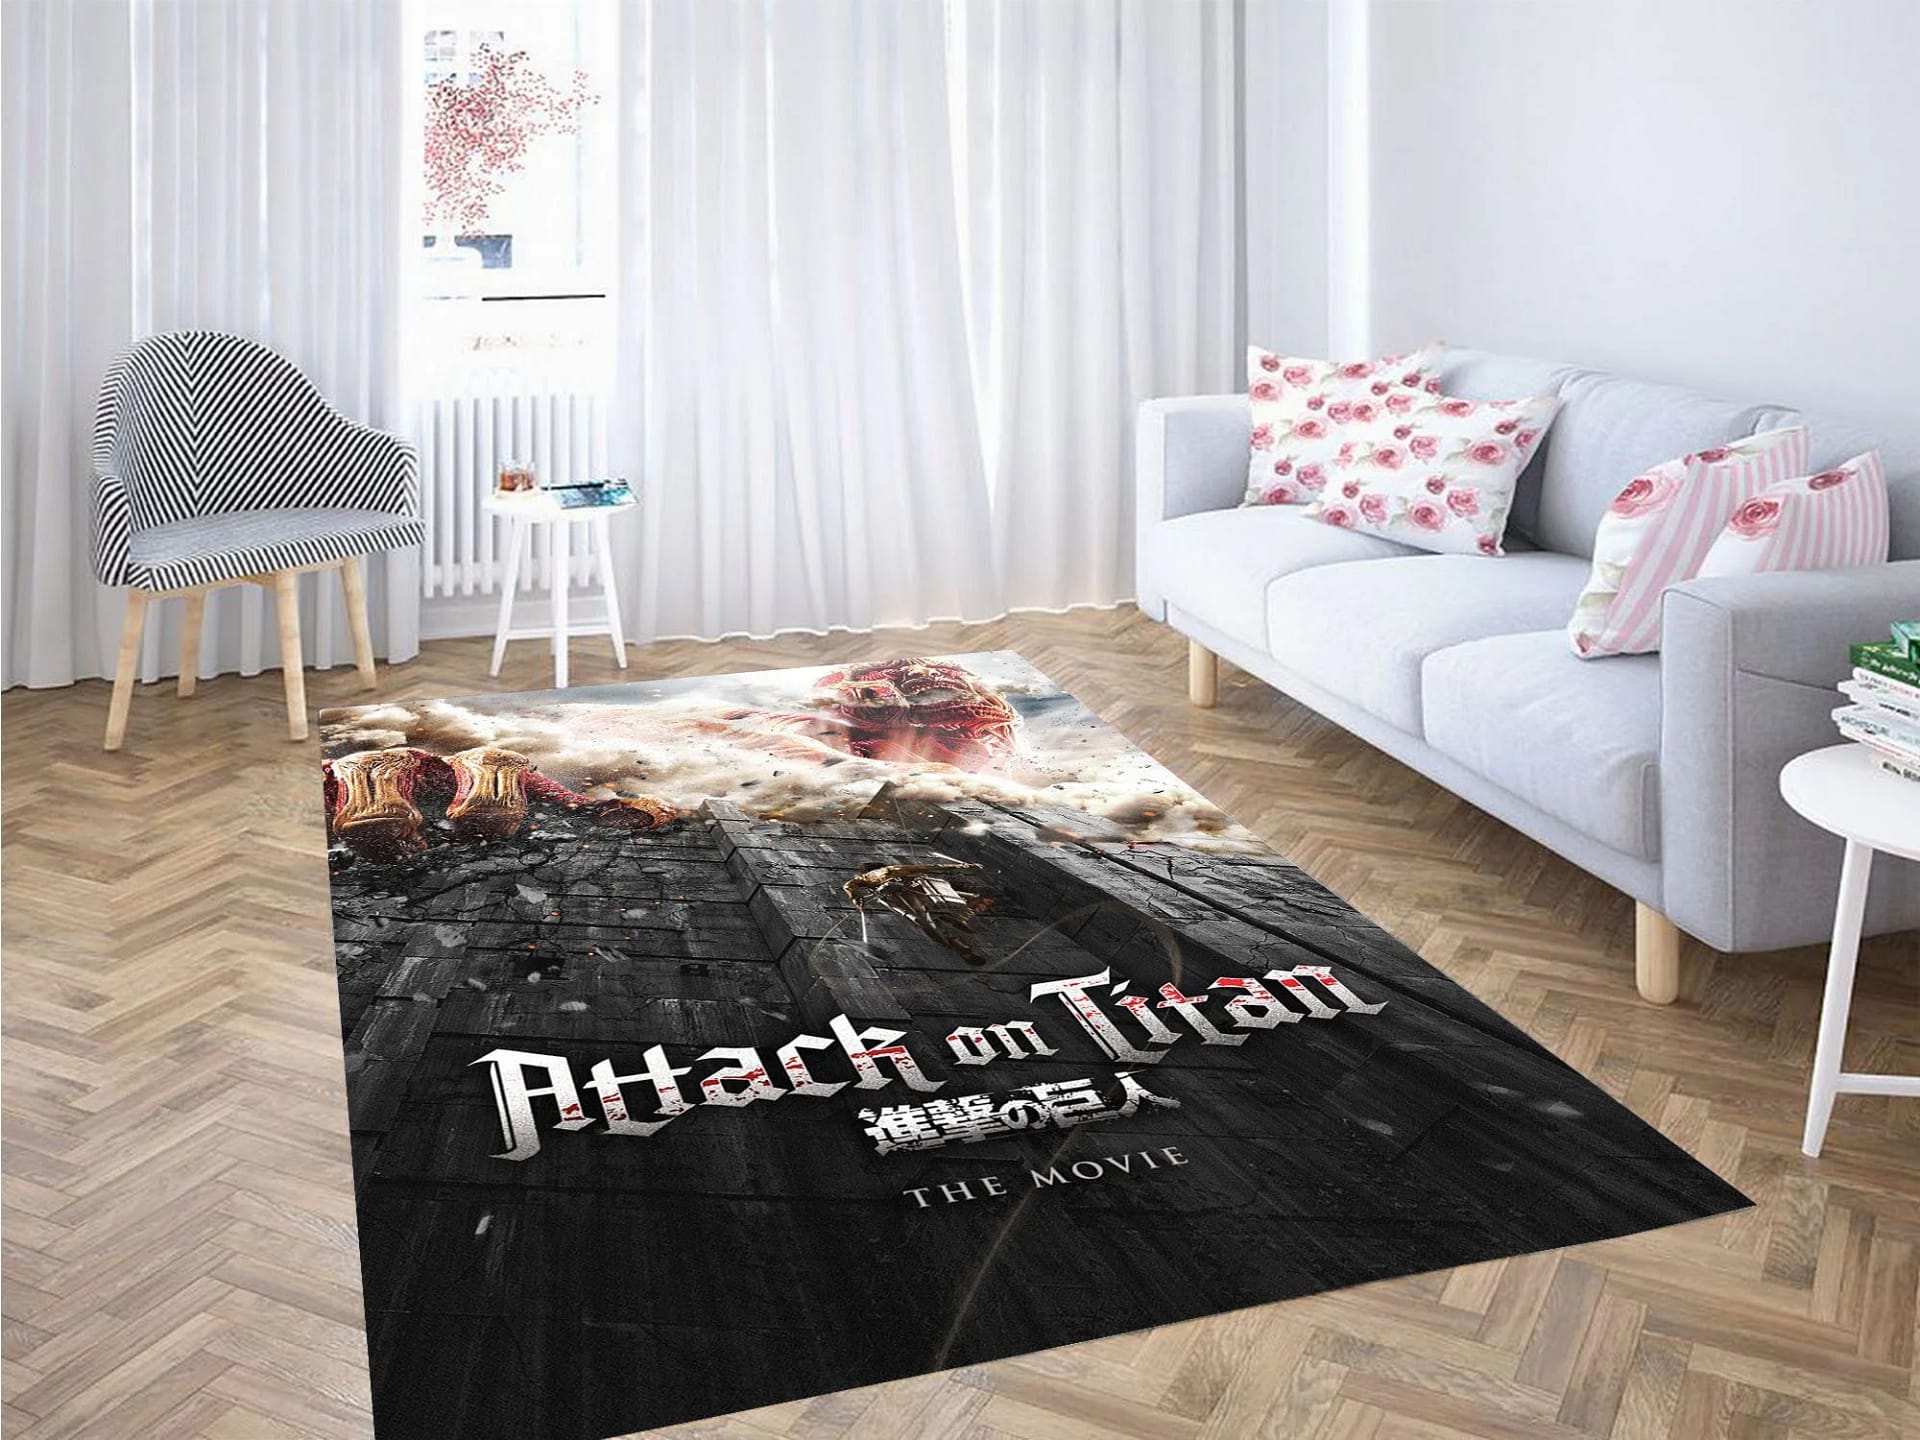 Big Wall Attack On Titan The Movie Carpet Rug